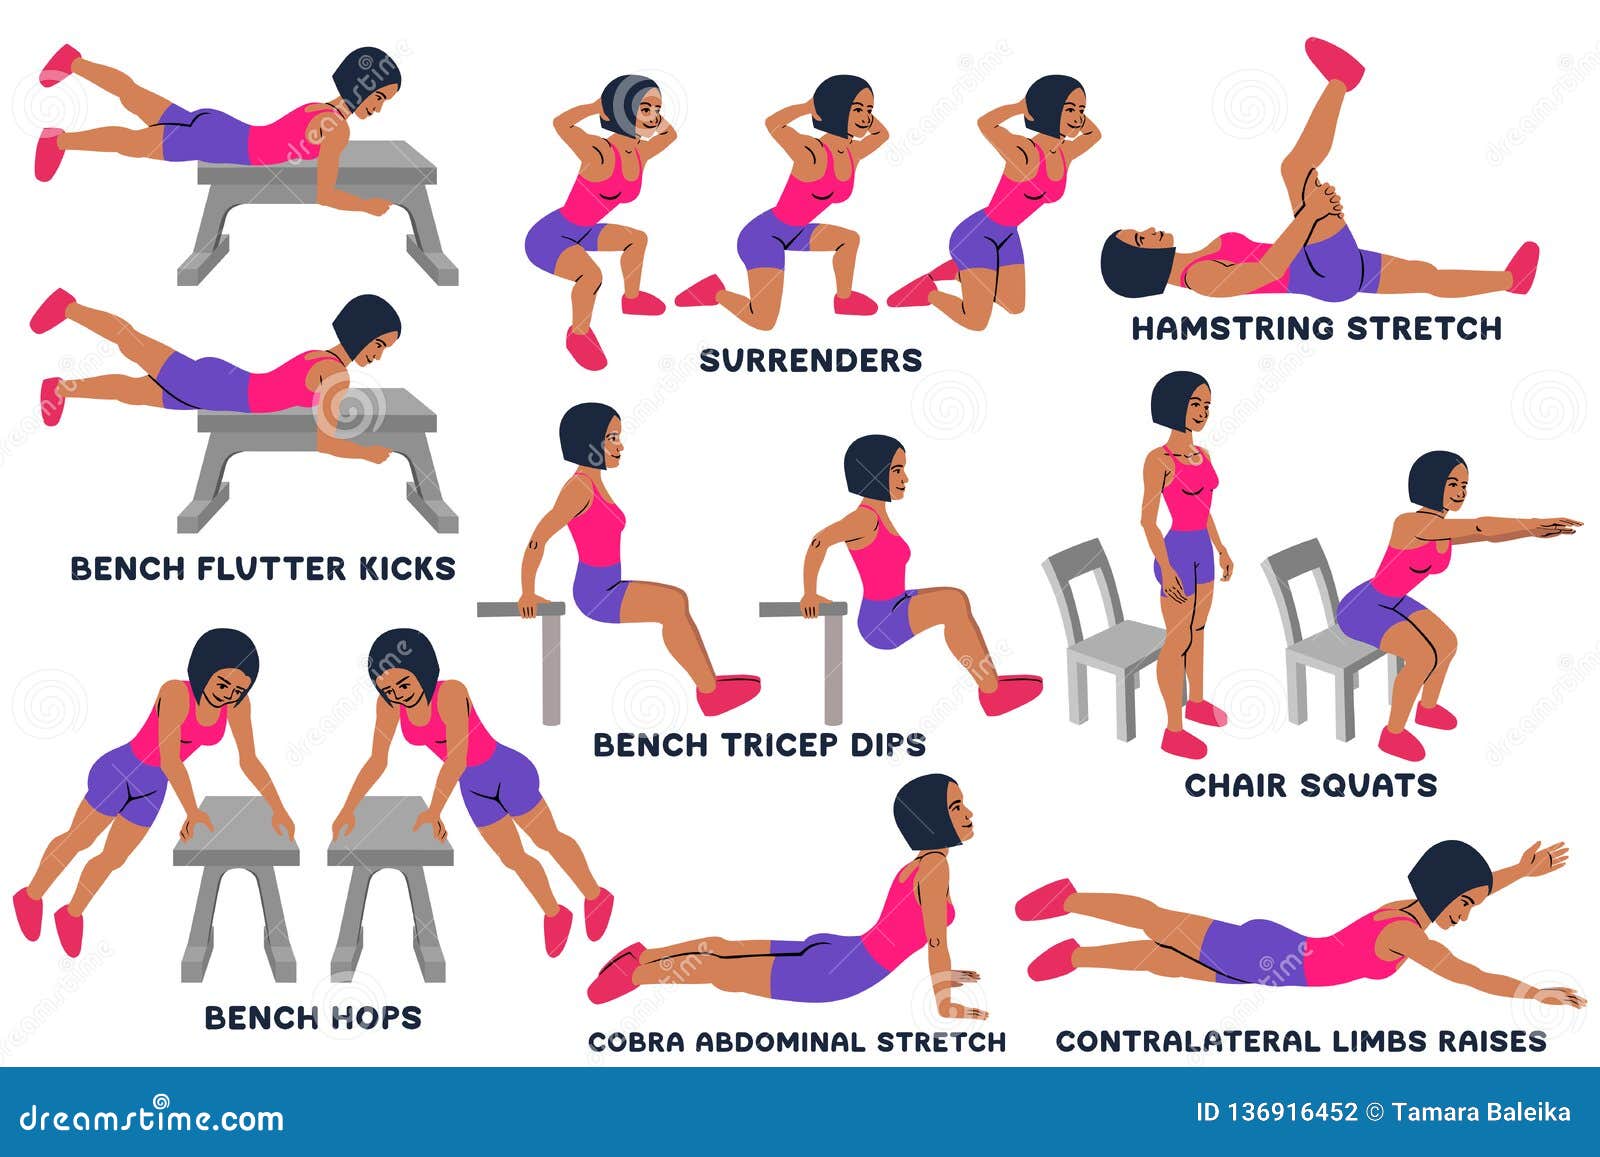 bench flutter kicks. surrenders. hamstring stretch. bench biceps dips. chair squats. bench hops. cobra abdominal stretch.